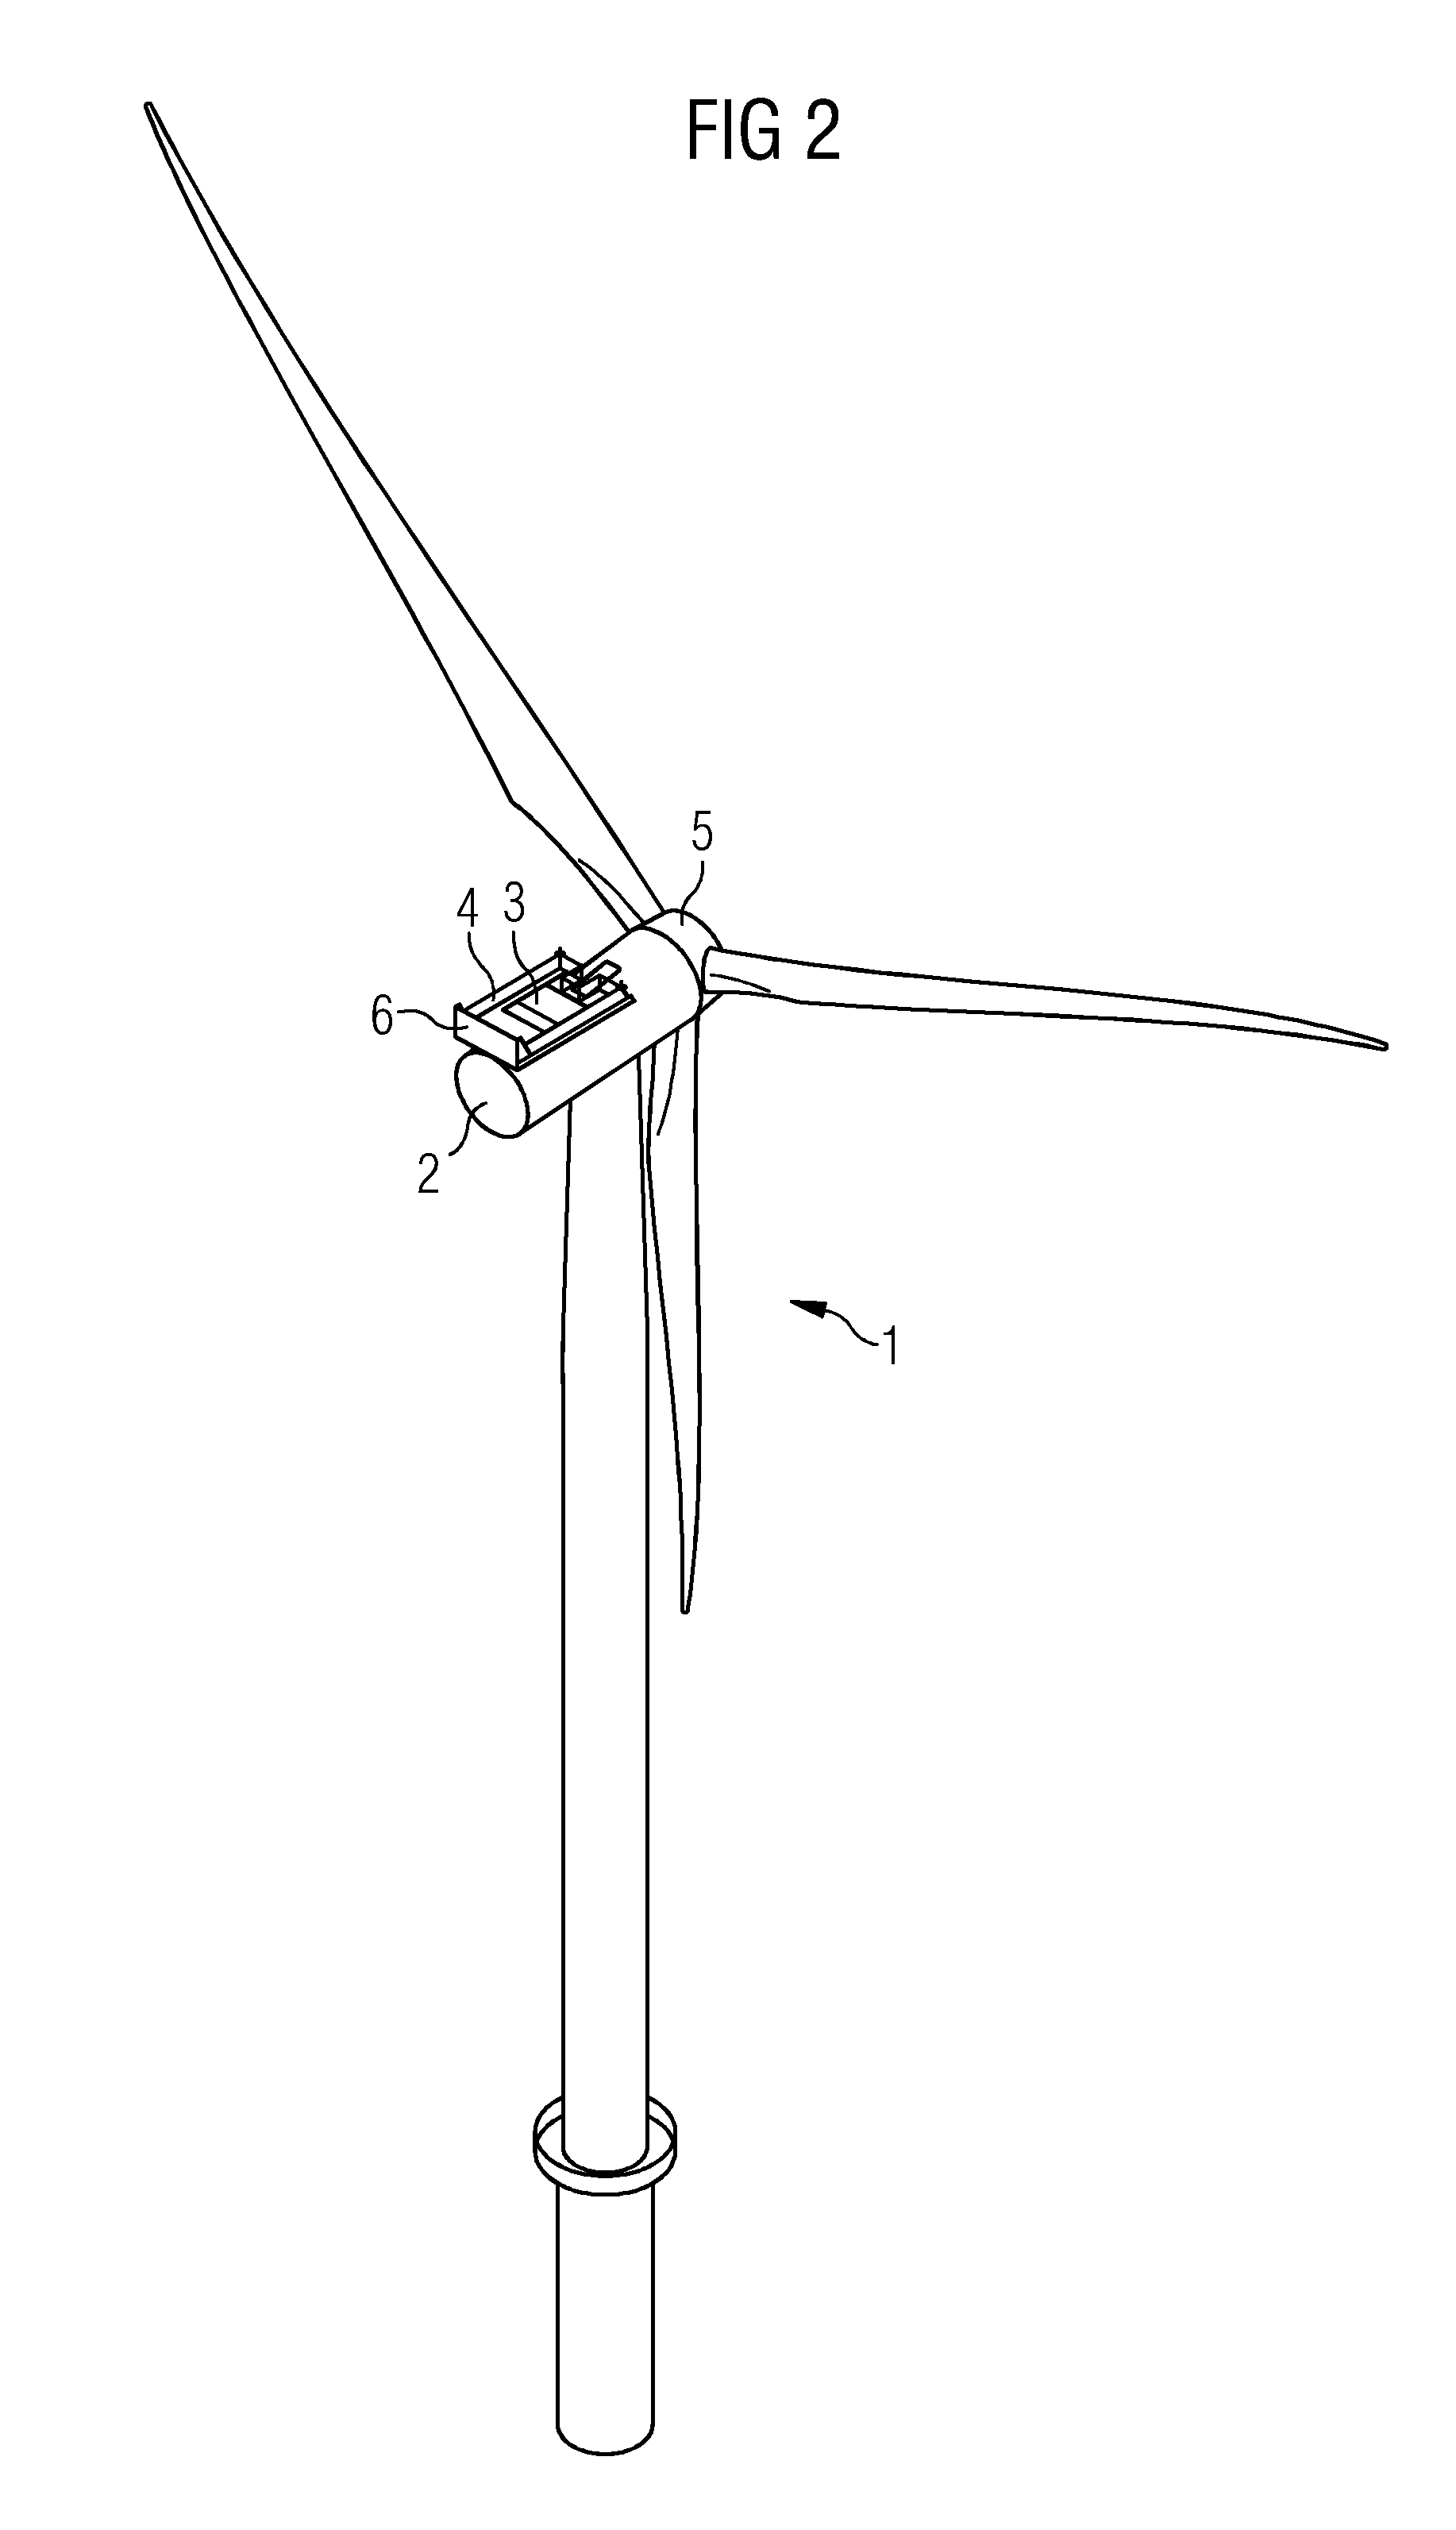 Cooling arrangement of a wind turbine